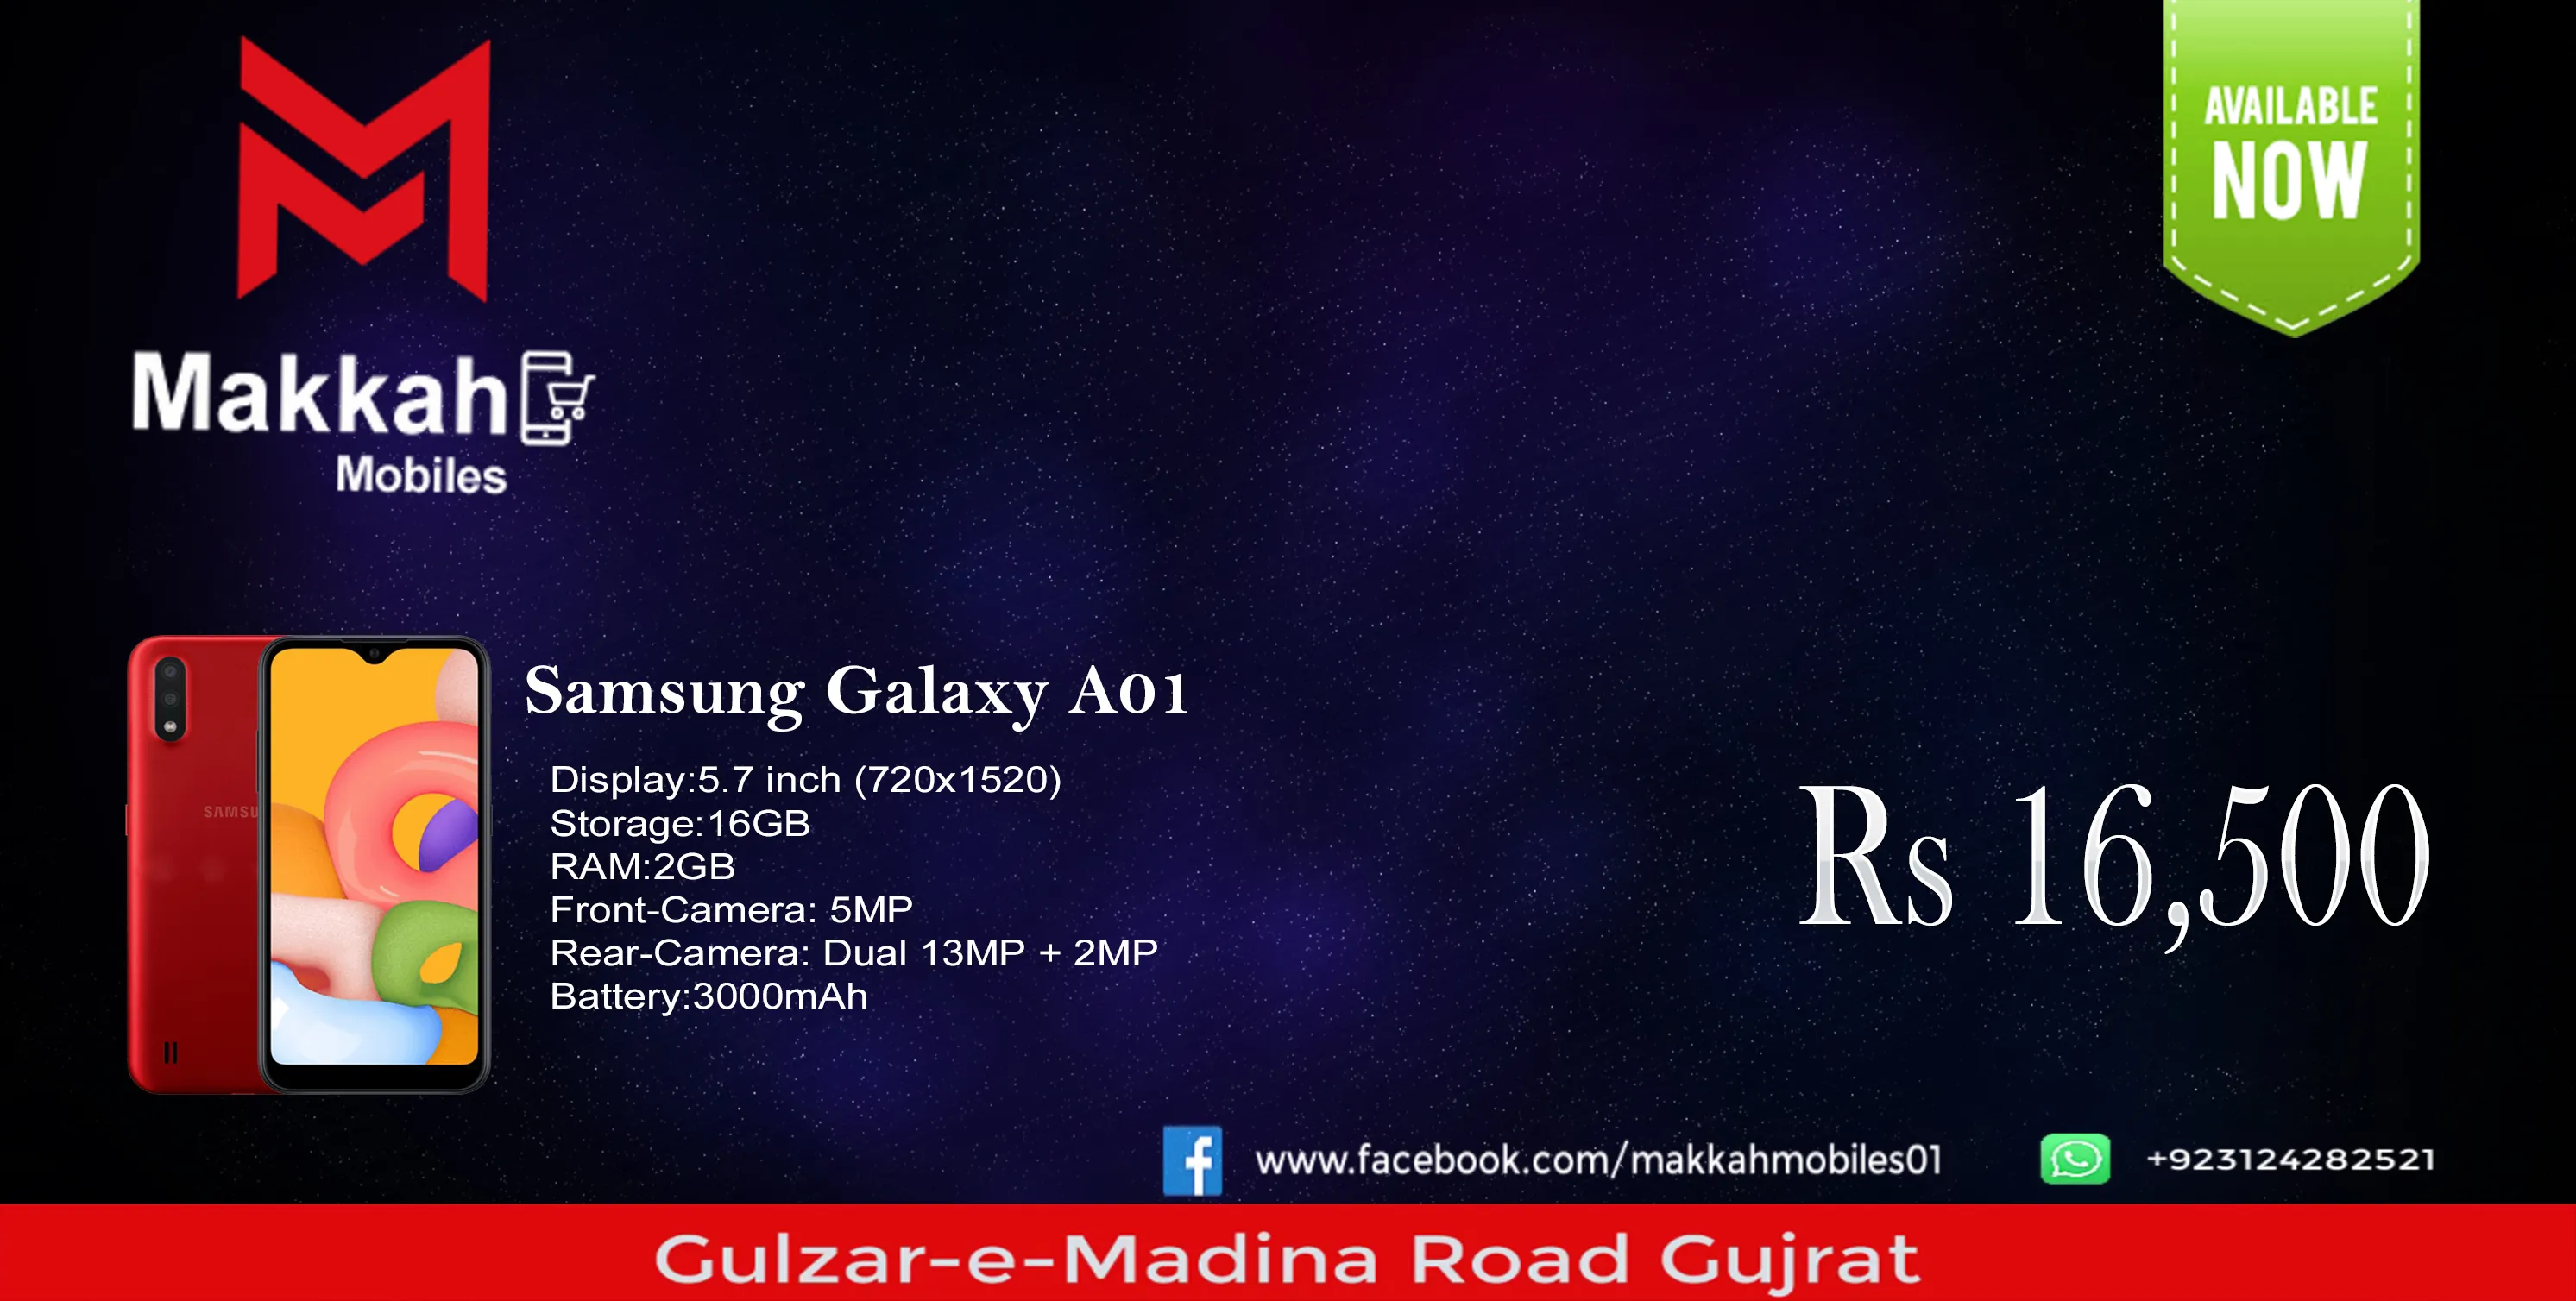 Samsung Galaxy A01 Makkah Mobiles Gujrat - photo 1